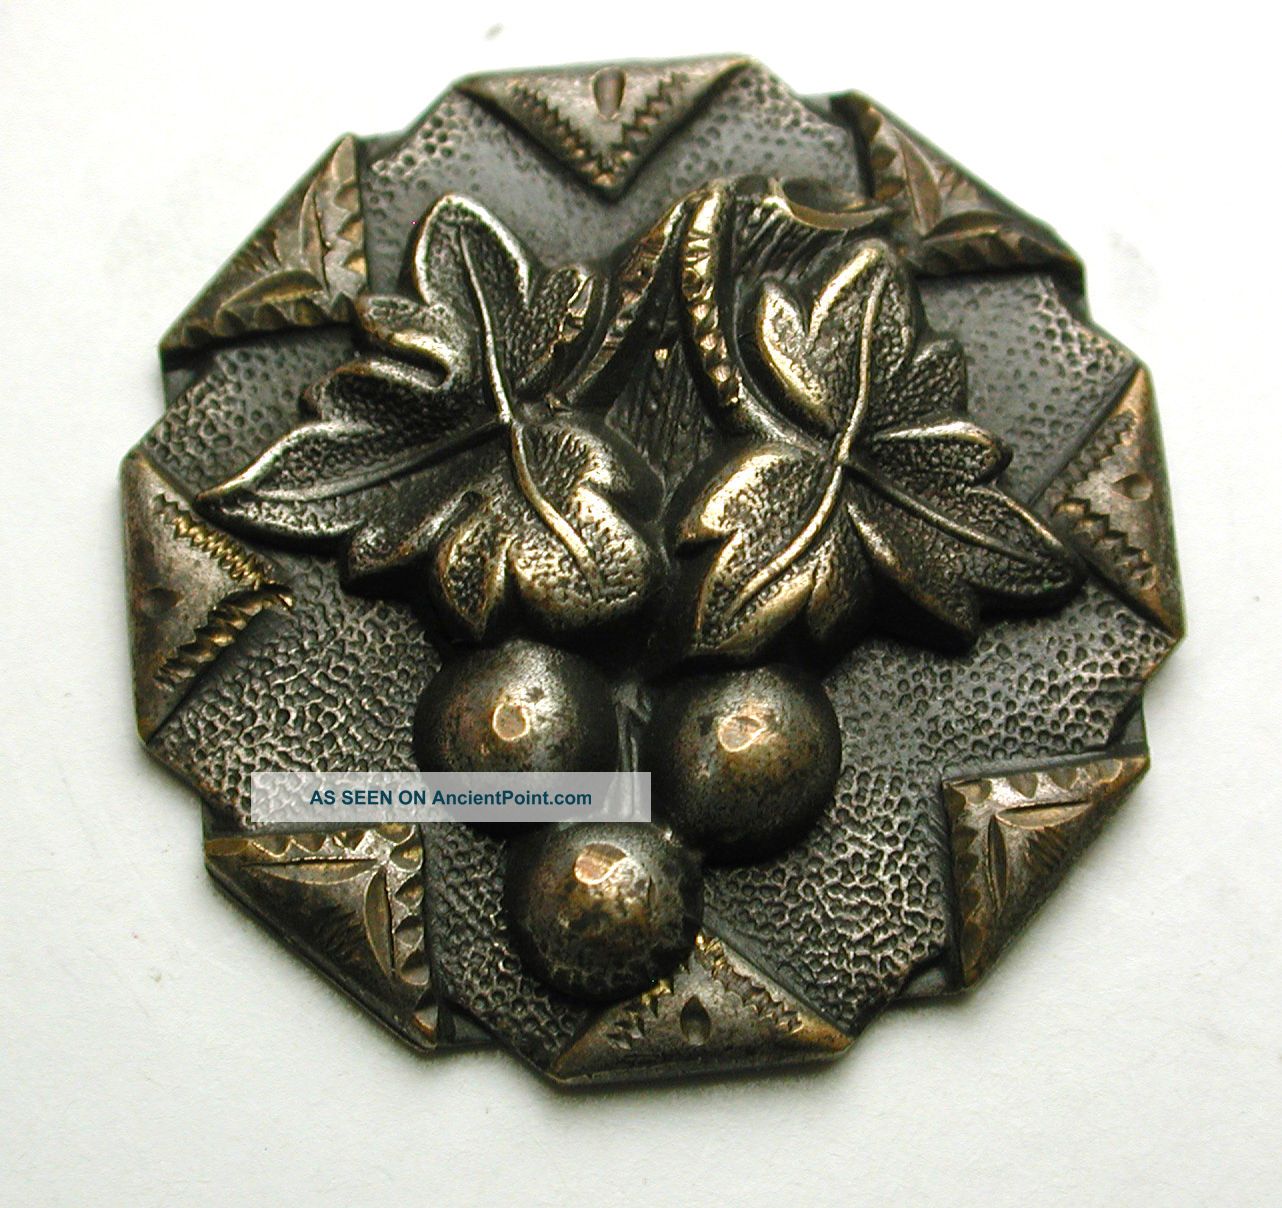 Antique Brass Button Grapes & Leaves W/ Handkerchief Border - 7/8 